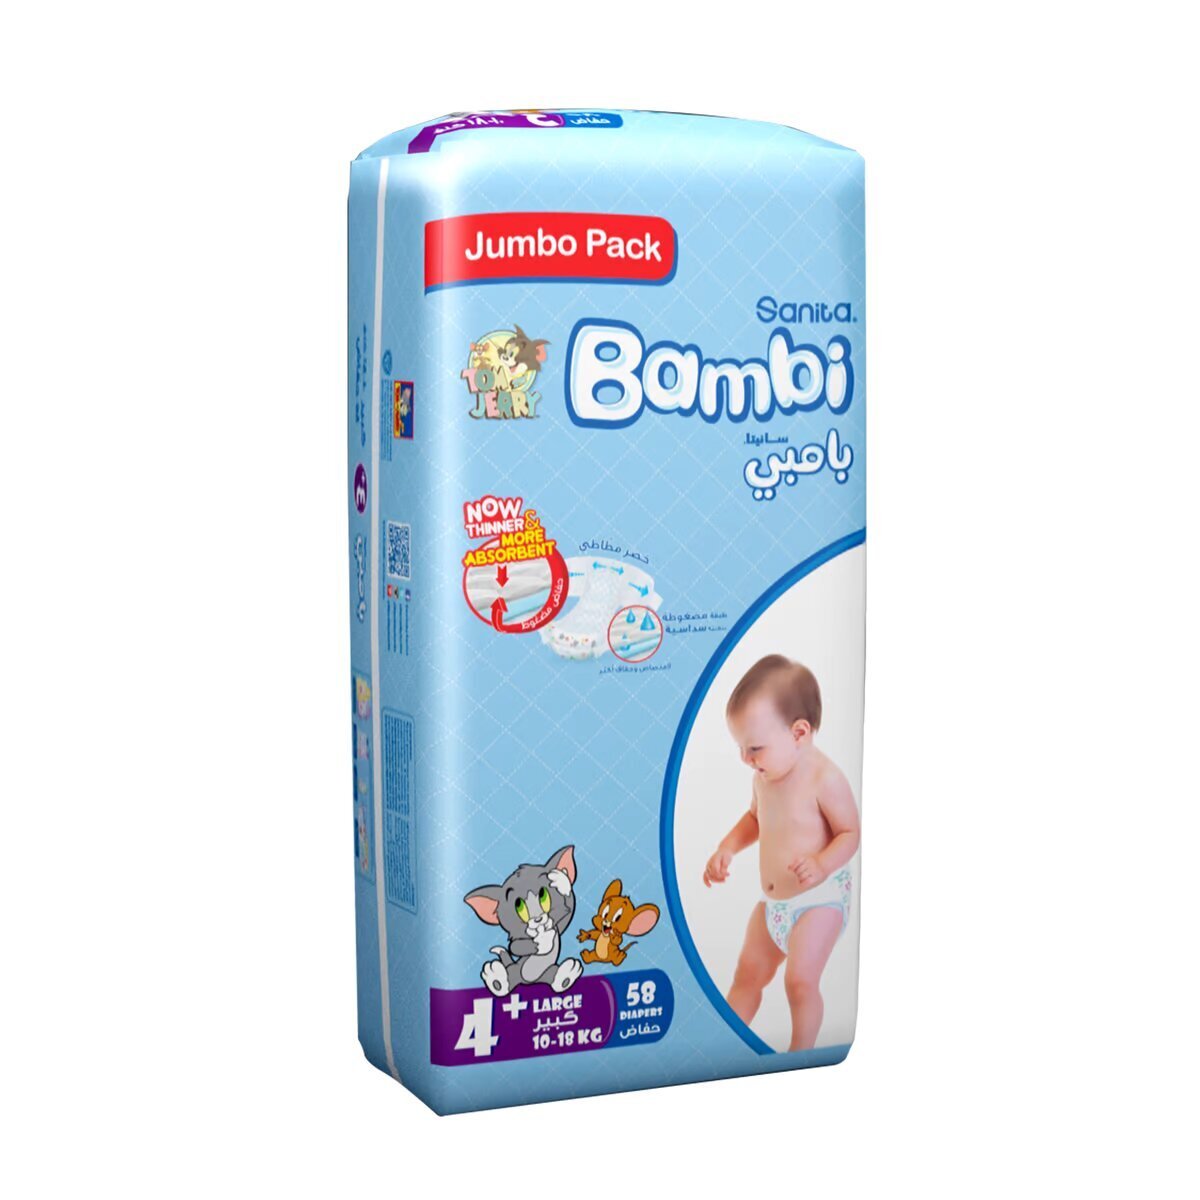 Sanita Bambi Baby Diaper Jumbo Pack Diaper Size4+ Large 10-18kg 58pcs